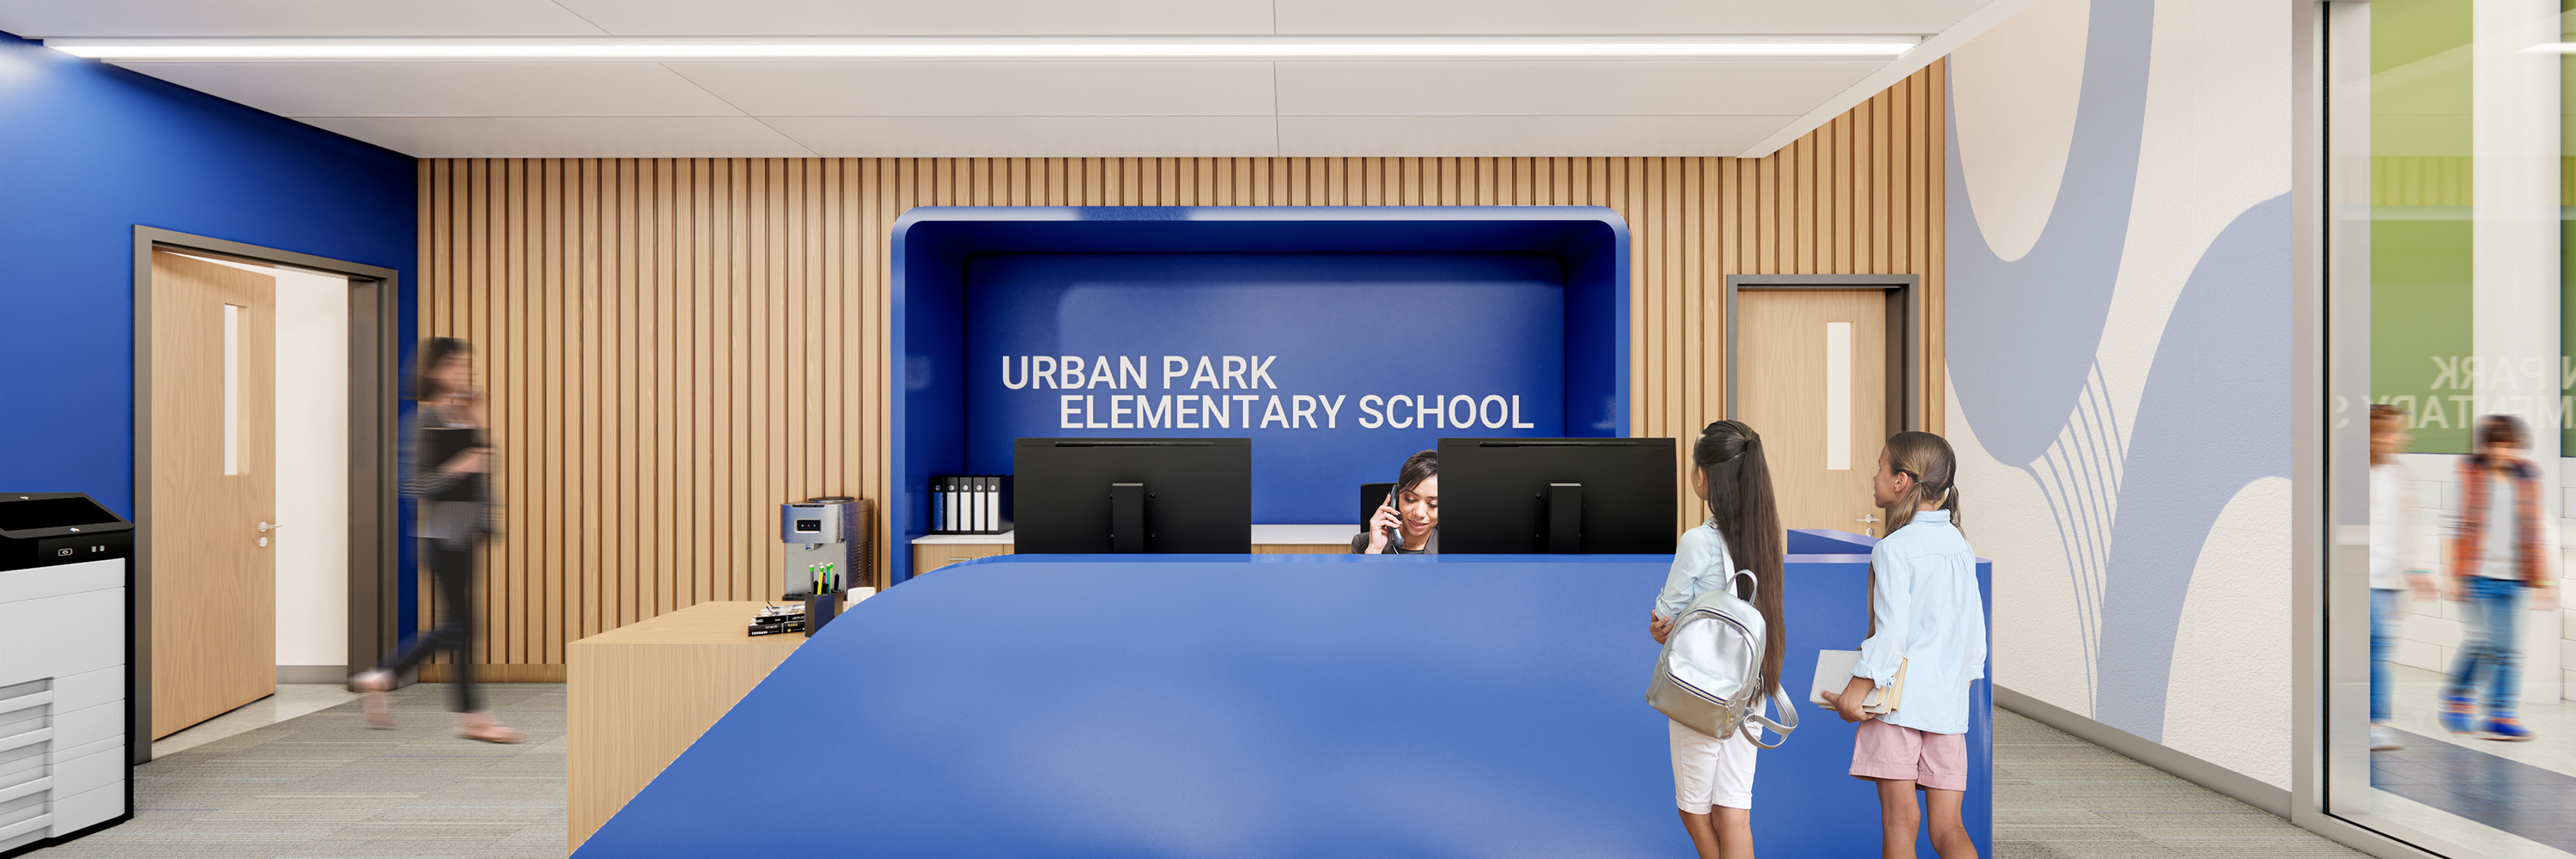 Urban Park Elementary School 